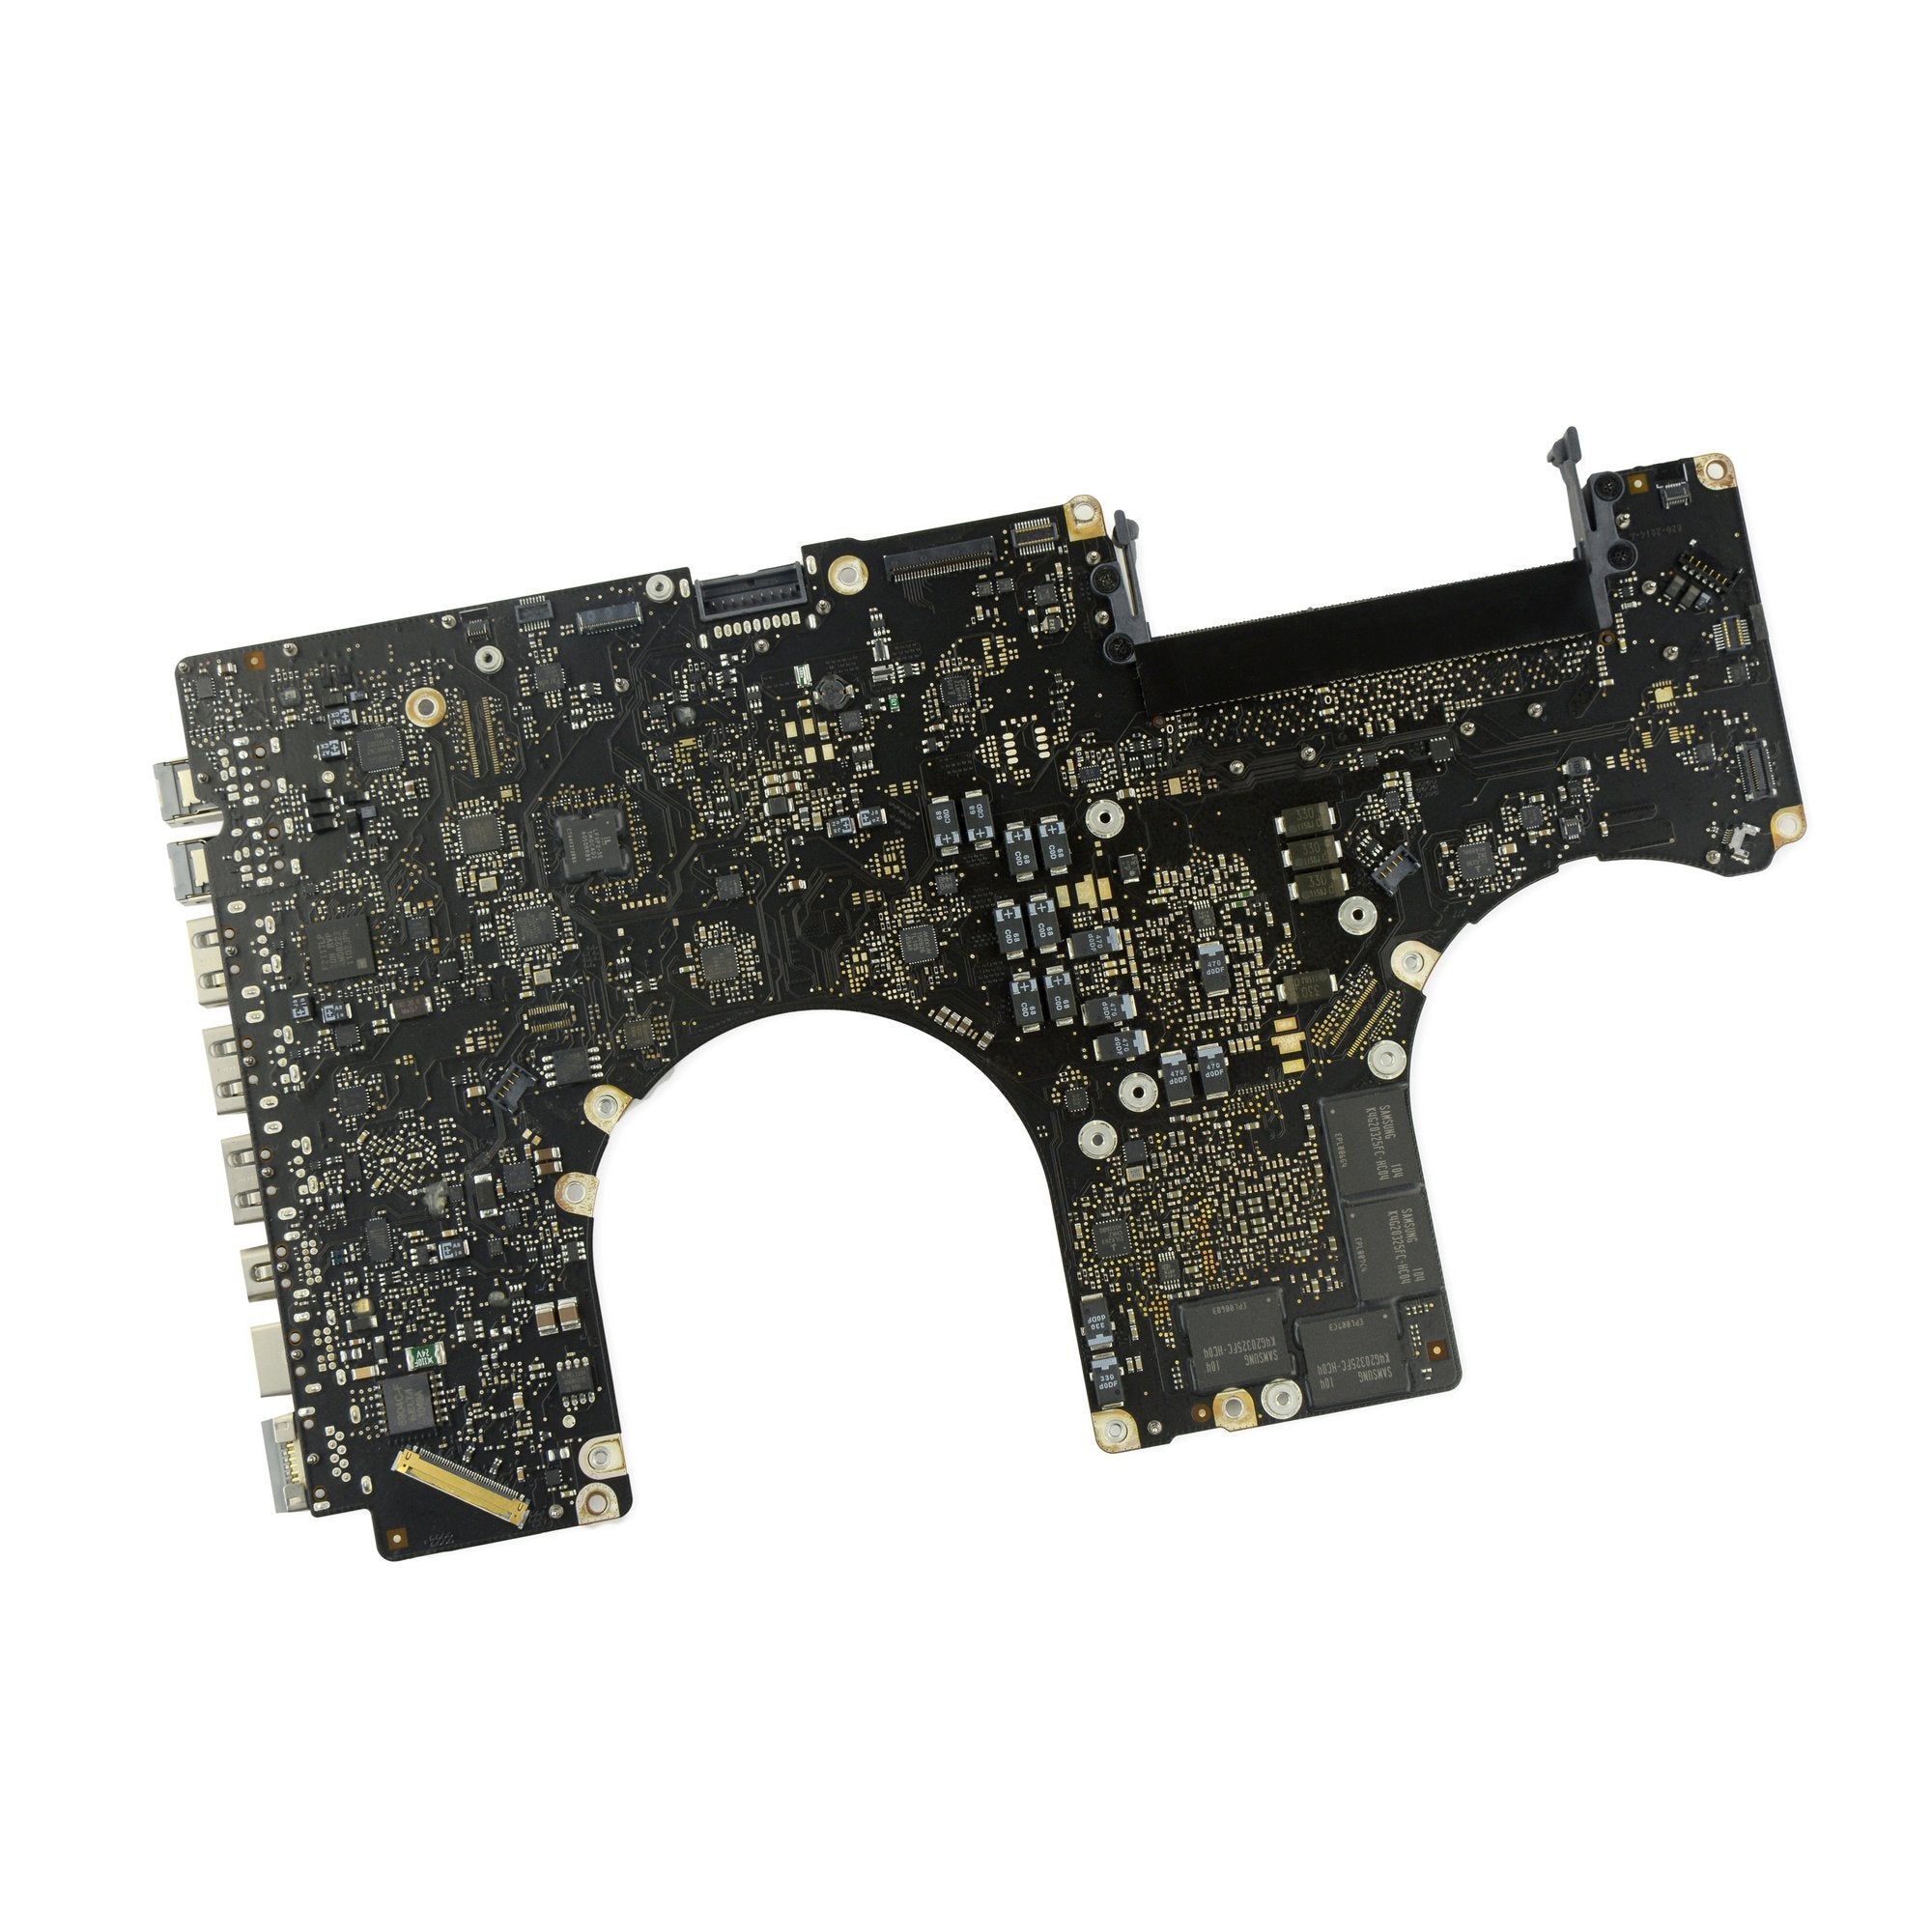 MacBook Pro 17" Unibody (Early 2011) 2.3 GHz Logic Board